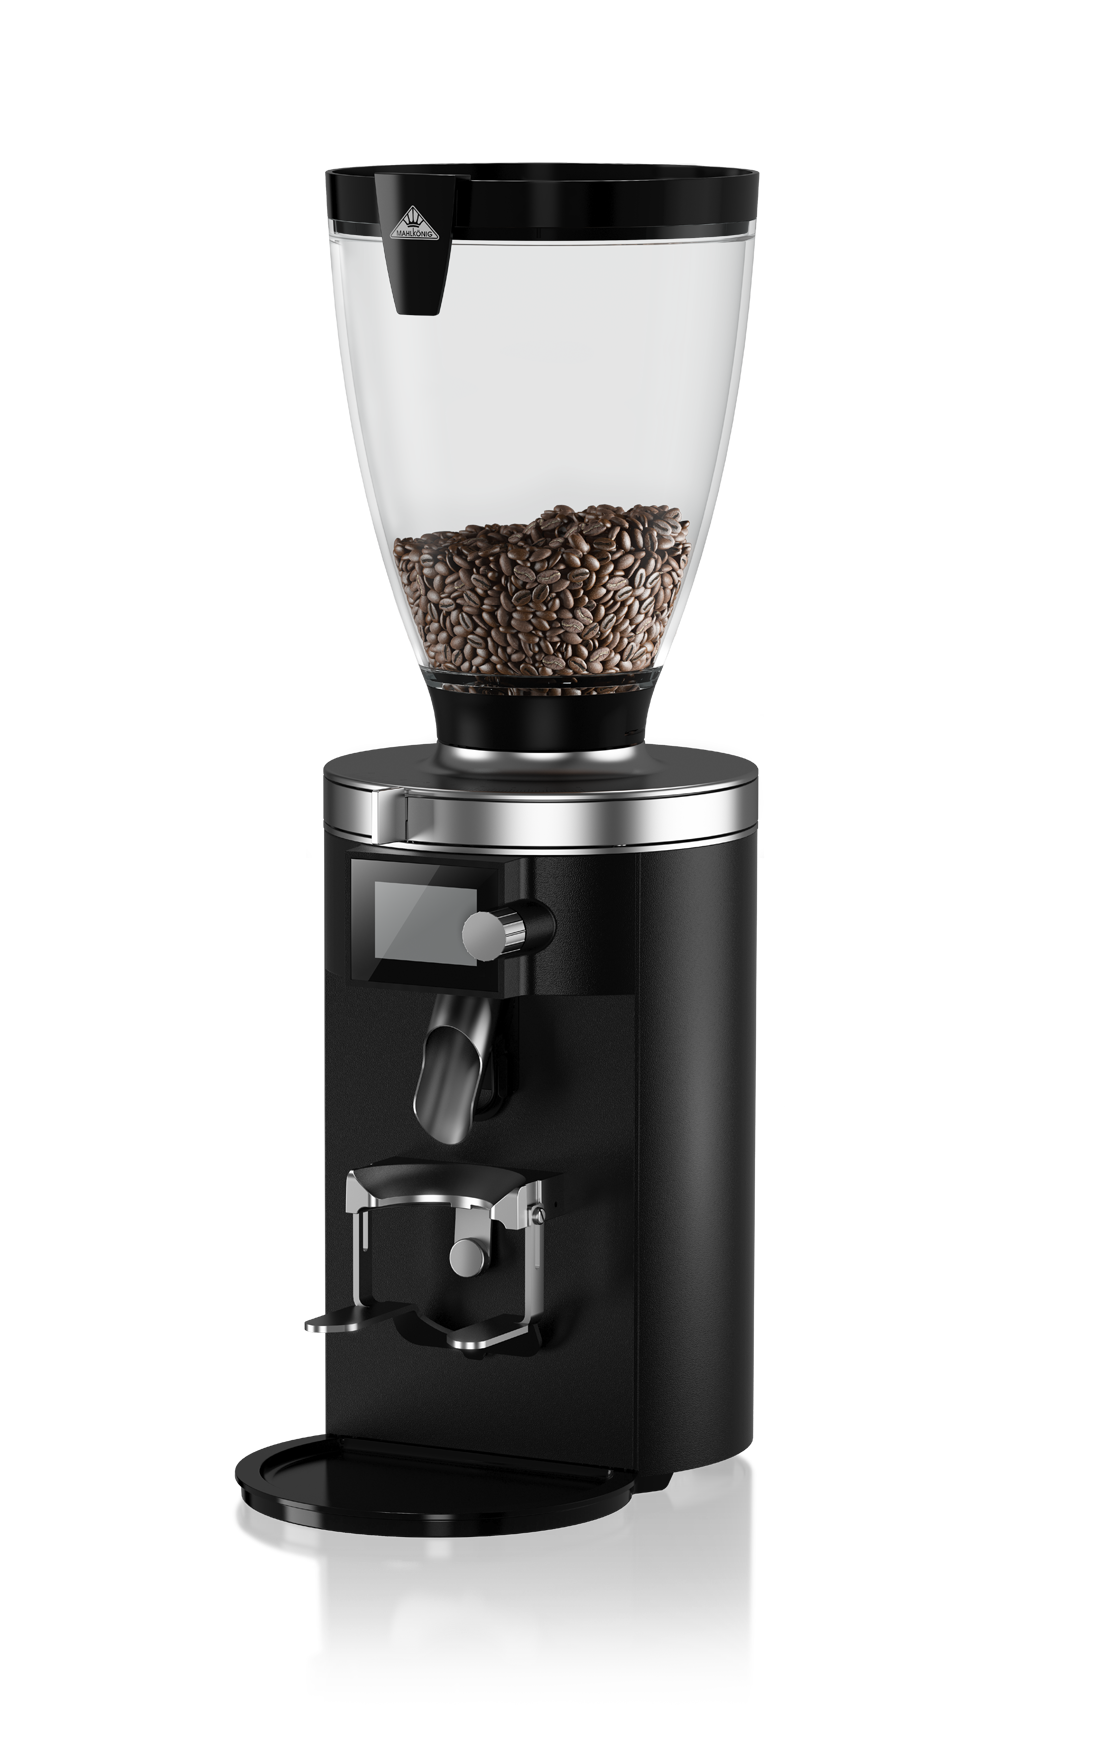 Mahlkoenig_E65S_espresso_grinder.png